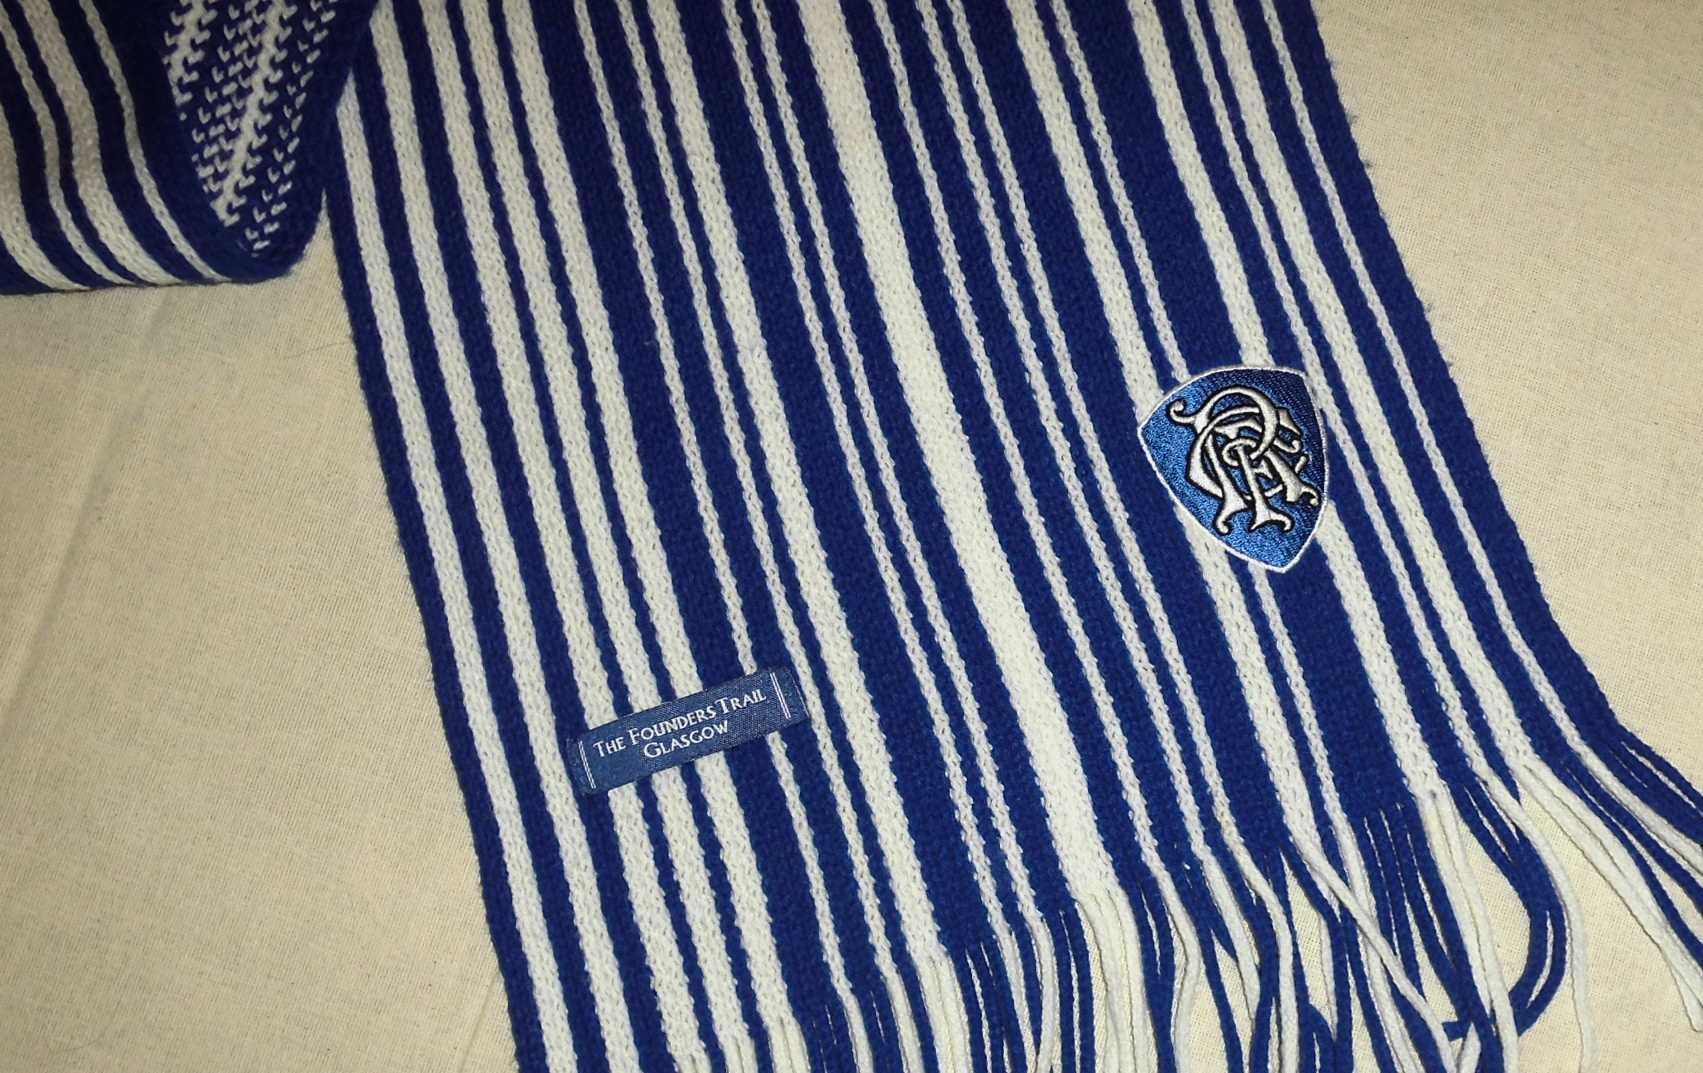 Шарф клубний ретро Glasgow Rangers Founders Trail scarf